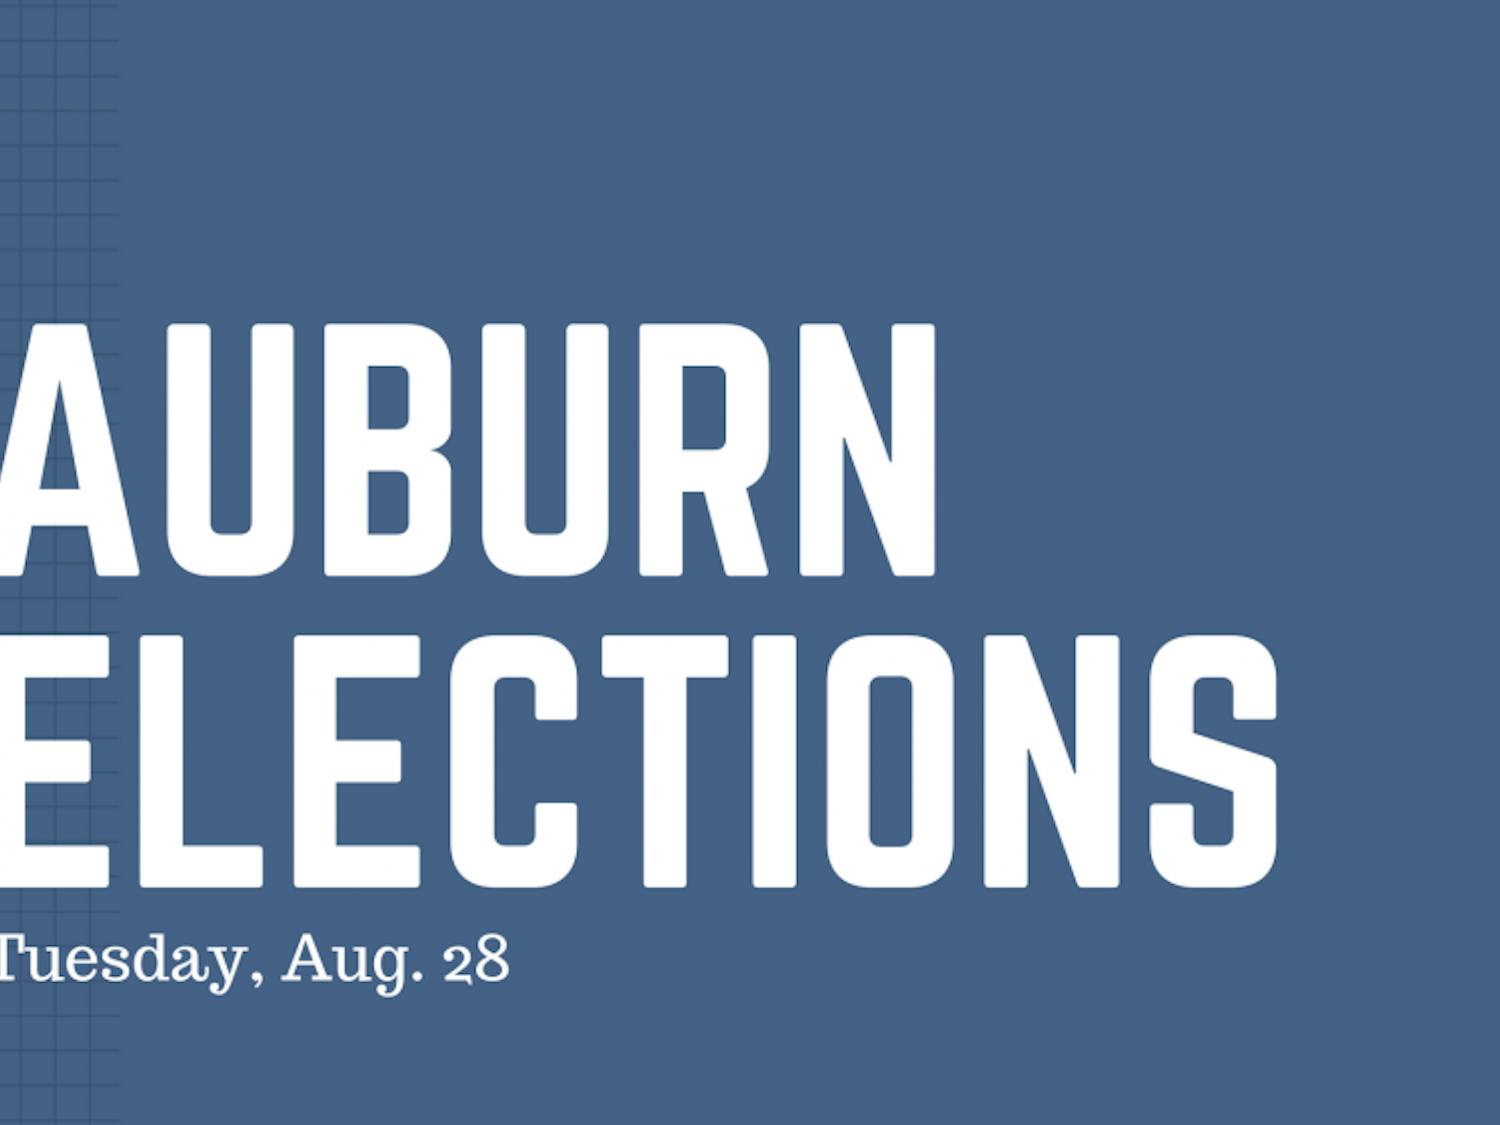 Auburn elections